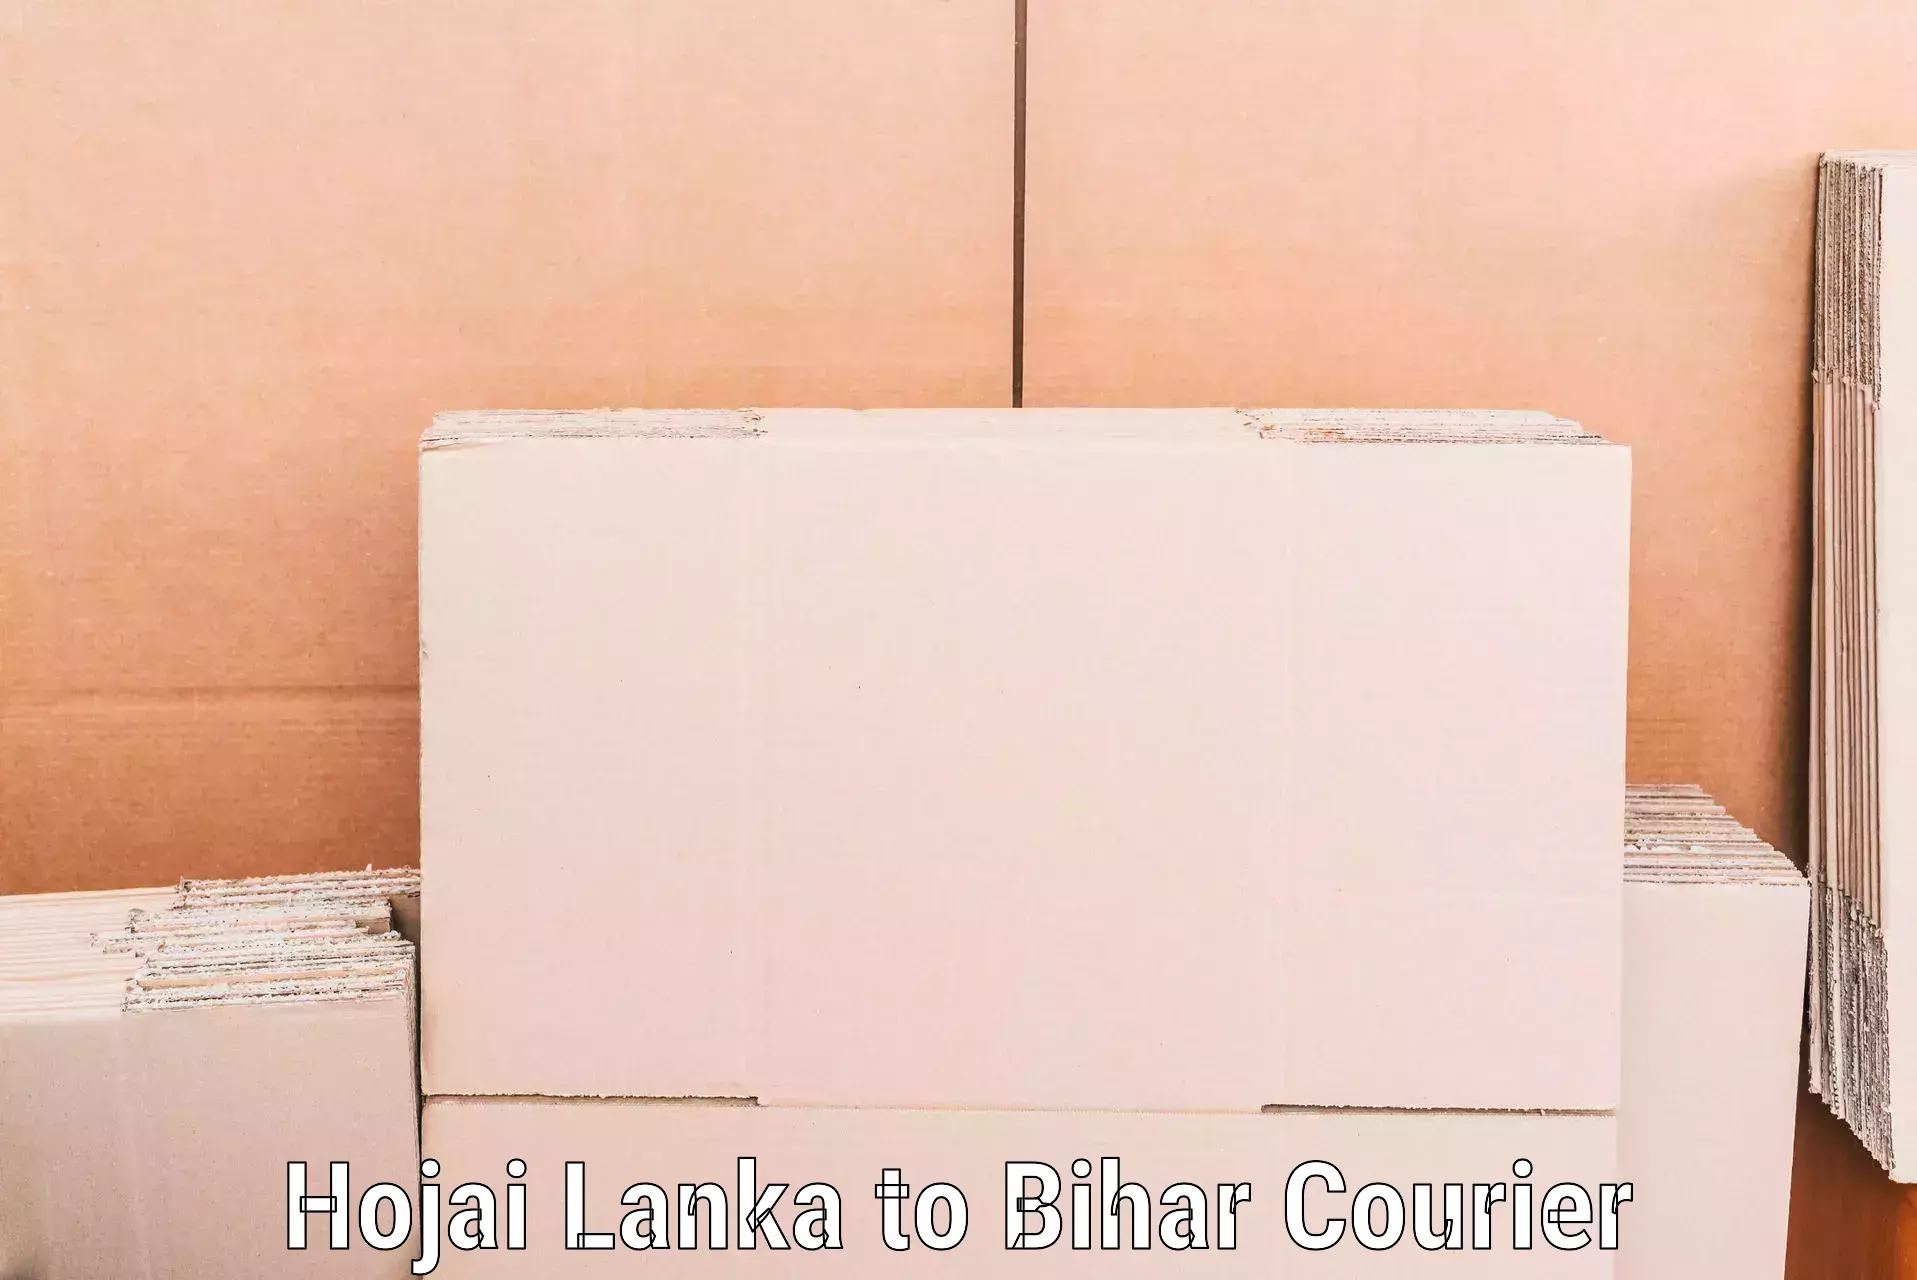 Cost-effective moving solutions Hojai Lanka to Alamnagar